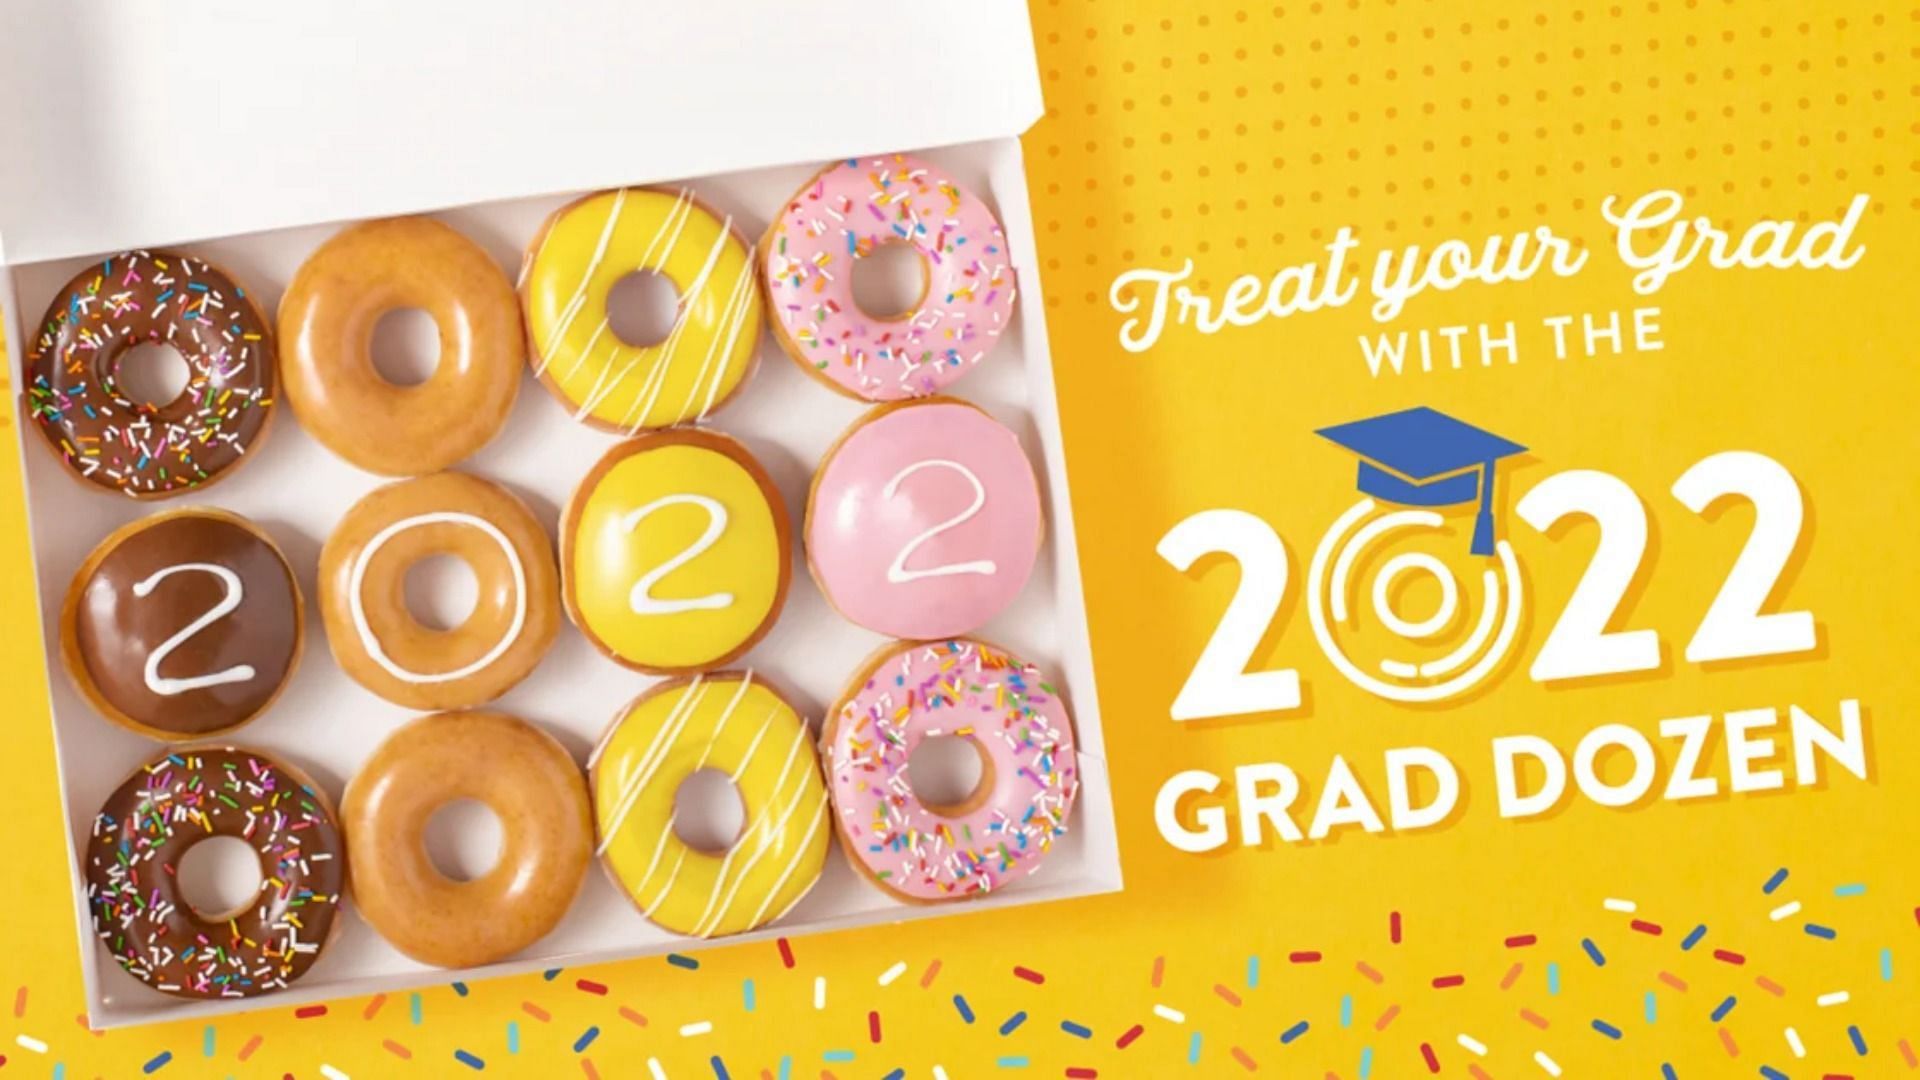 Krispy Kreme is gifting a free dozen of donuts to graduates of the Class of 2022 on May 25 (Image via Krispy Kreme)